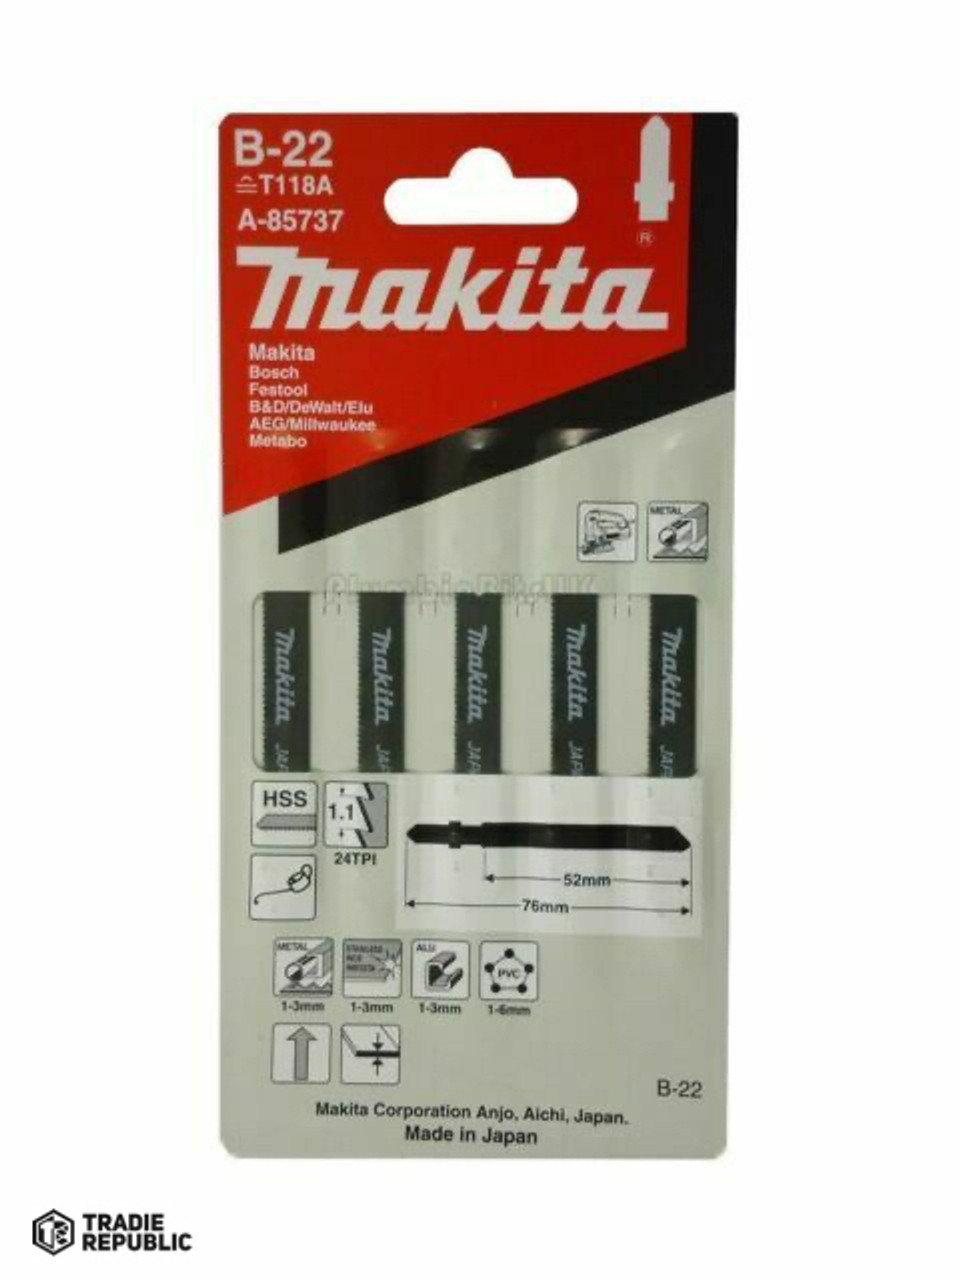 A-85737 Makita 5PK JIGSAW Blades NO B22